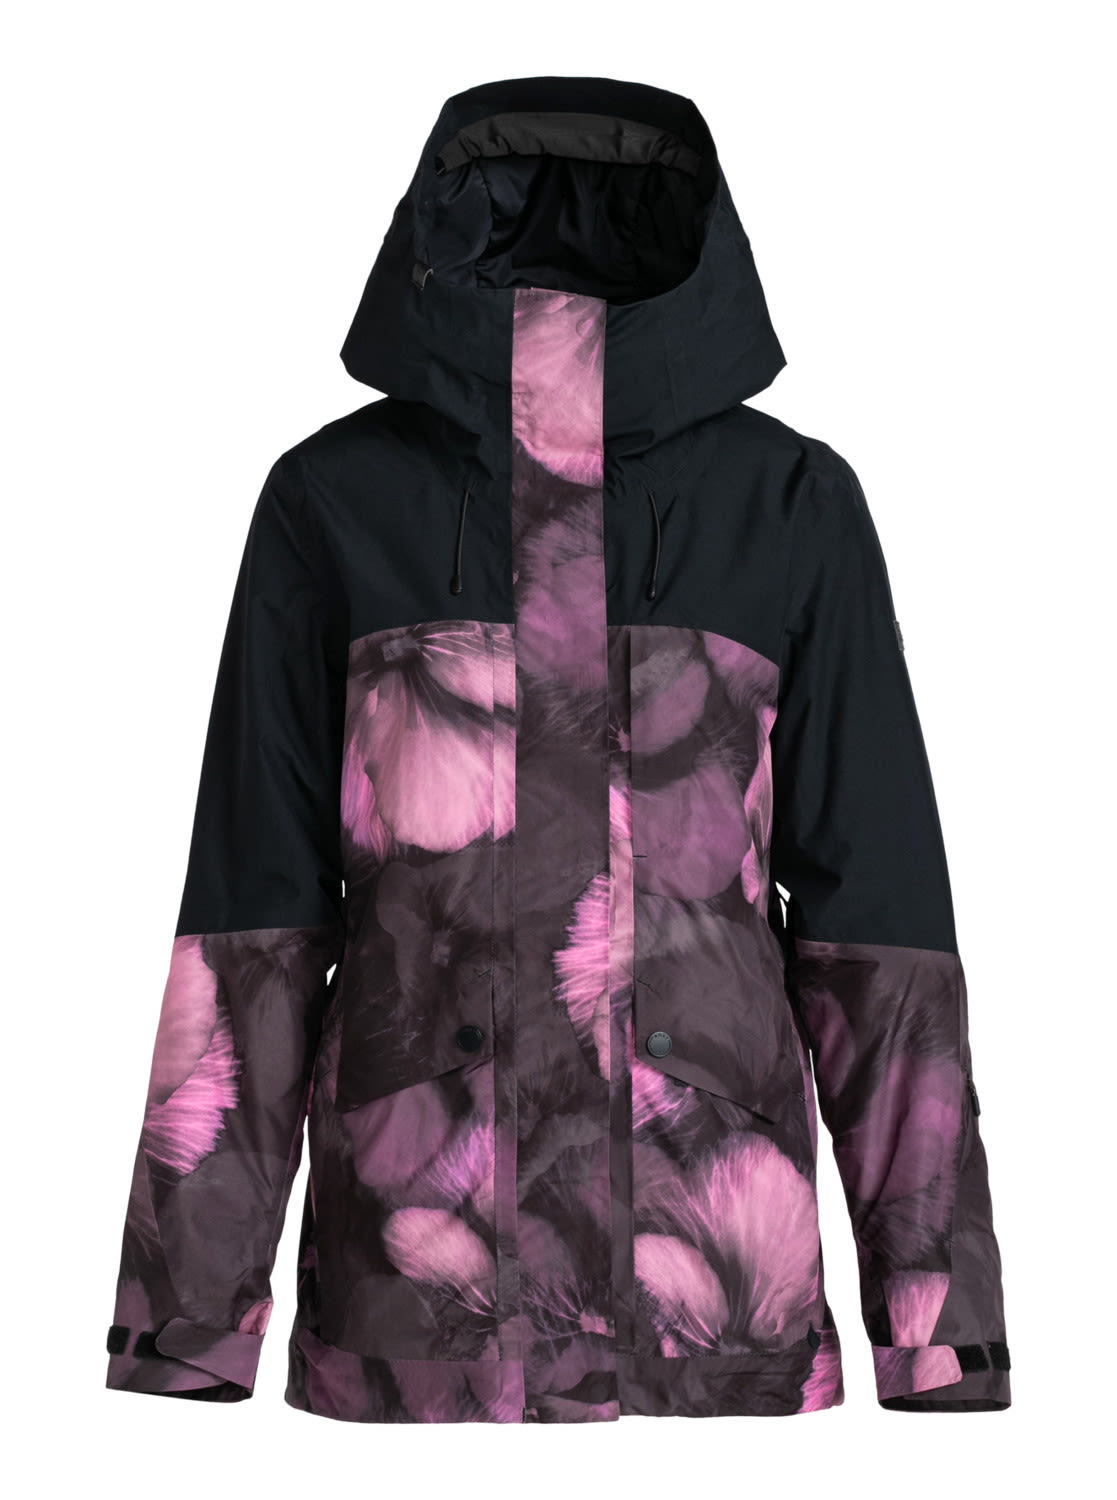 Roxy W Gore-tex Glade Jacket Printed Schwarz | Größe XS | Damen Ski- & Snowboa